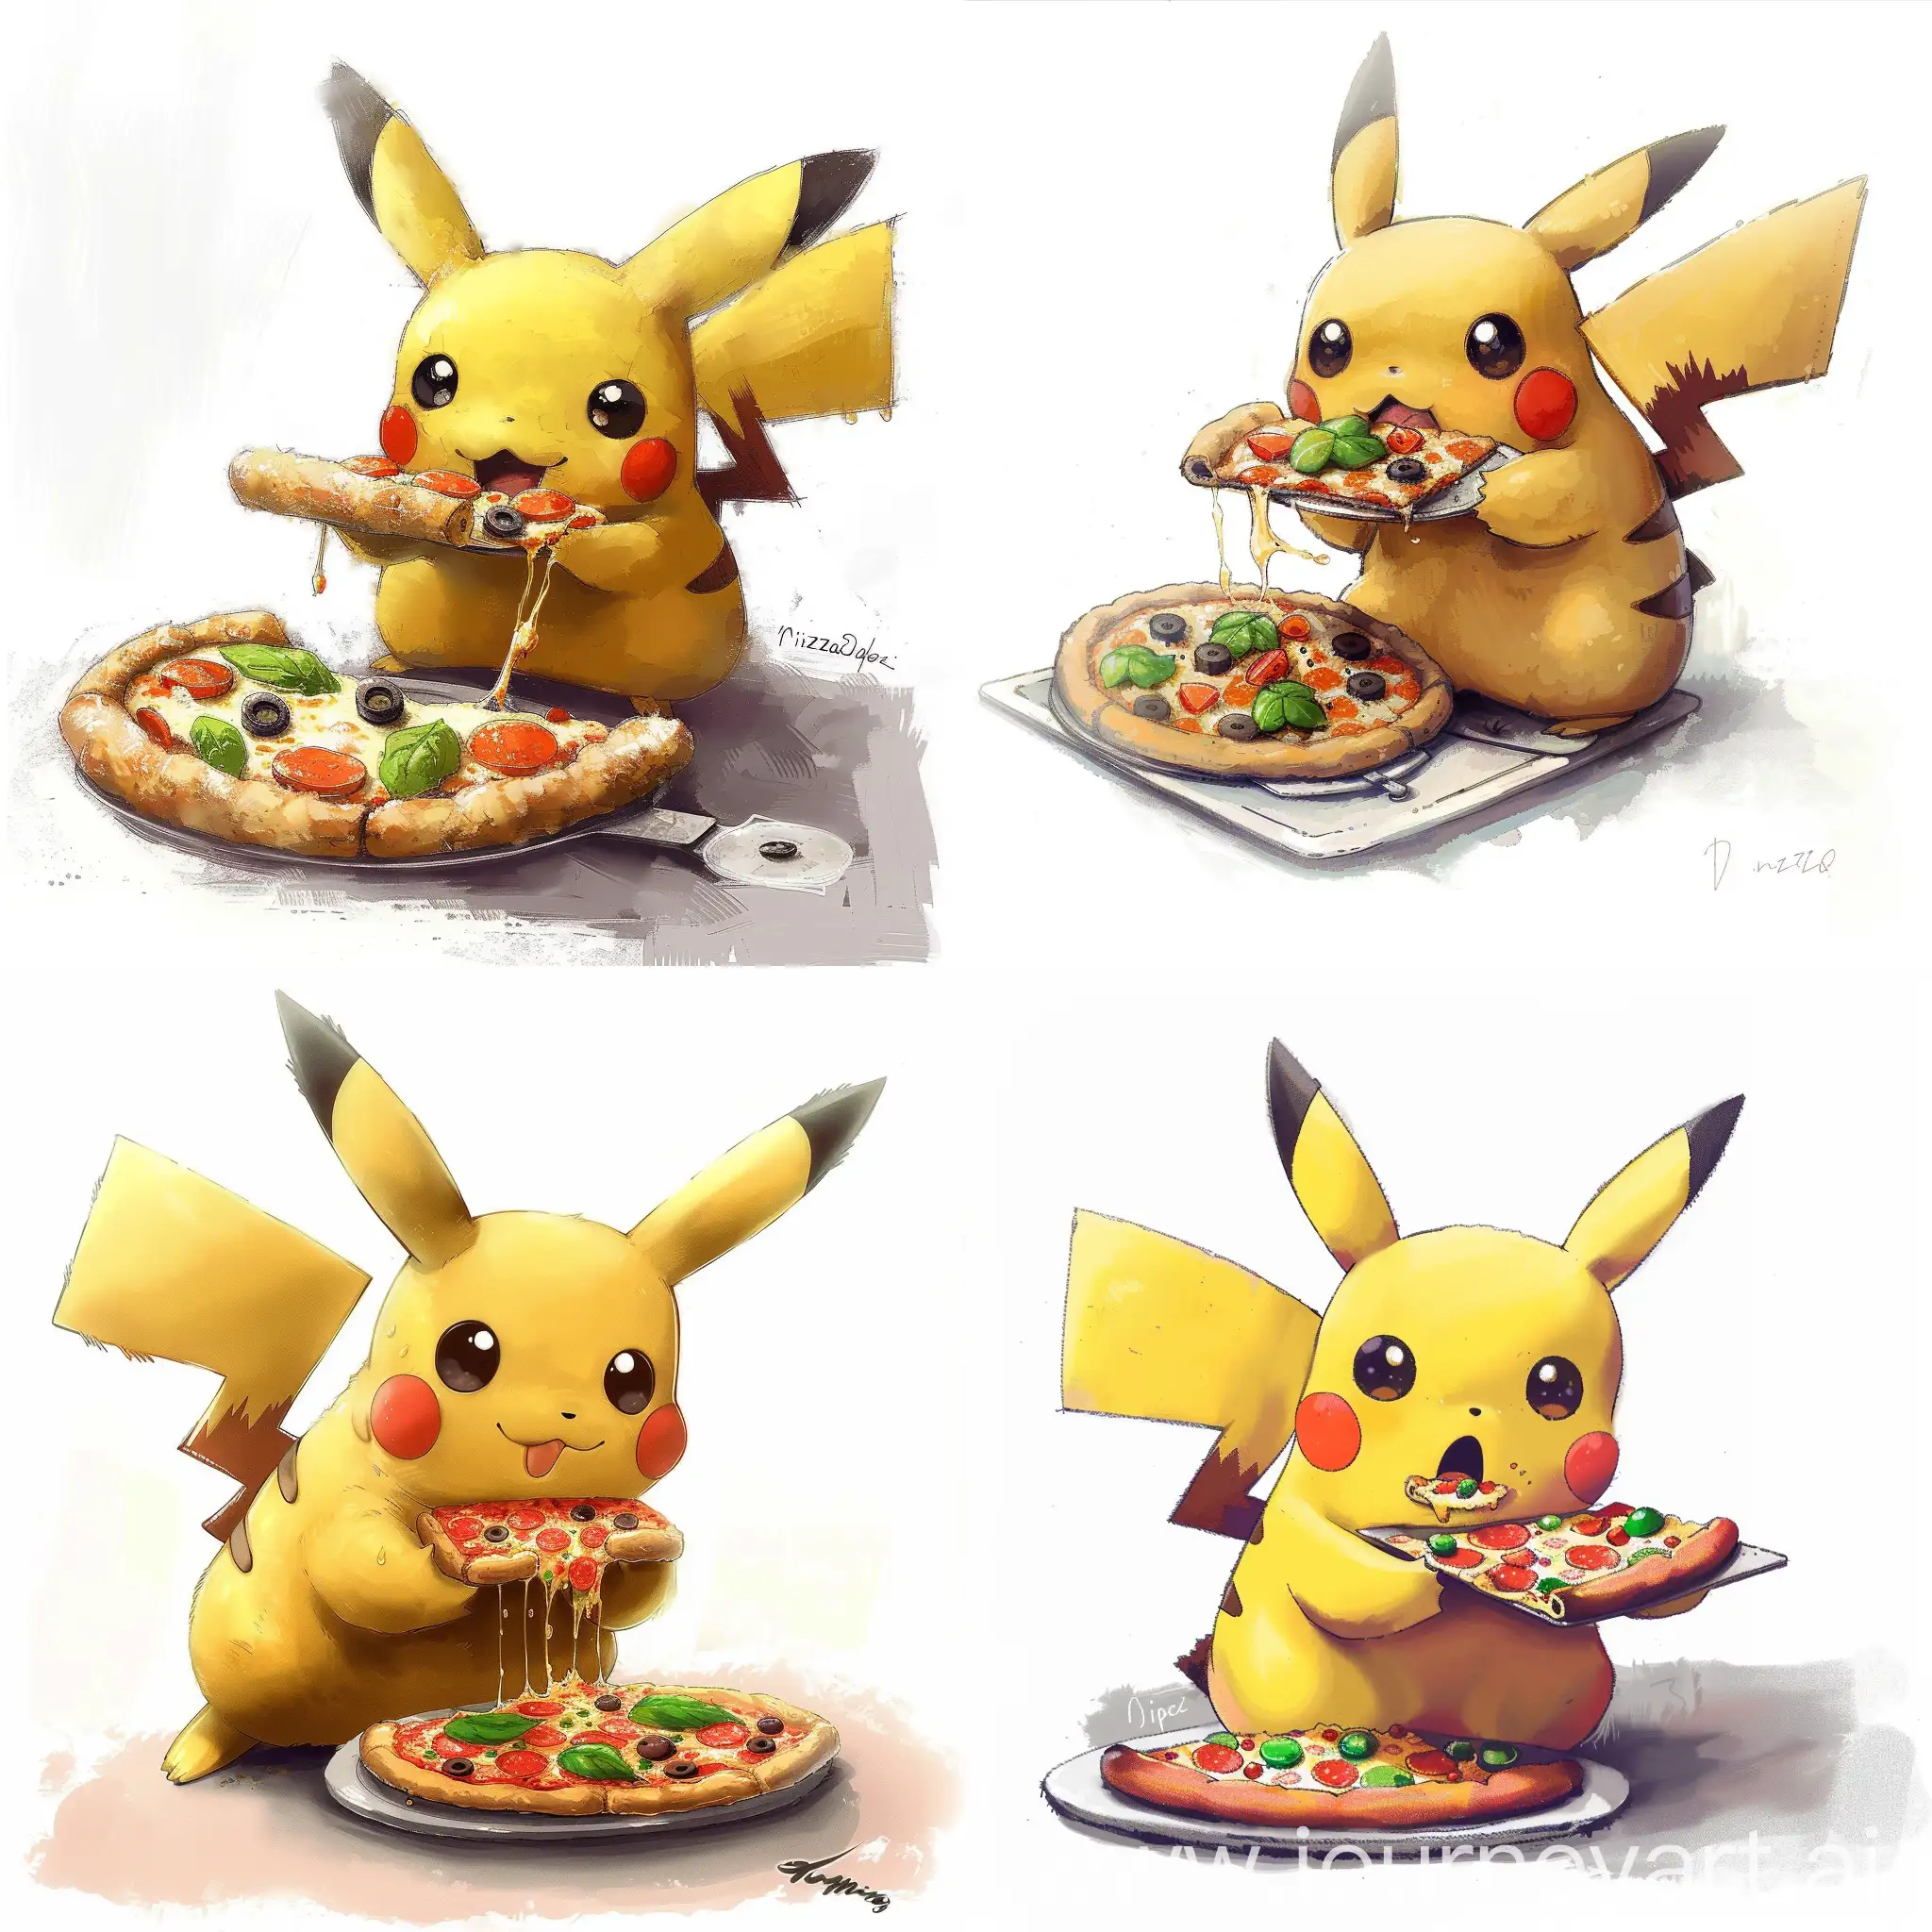 Pikachu-Enjoying-Pizza-Feast